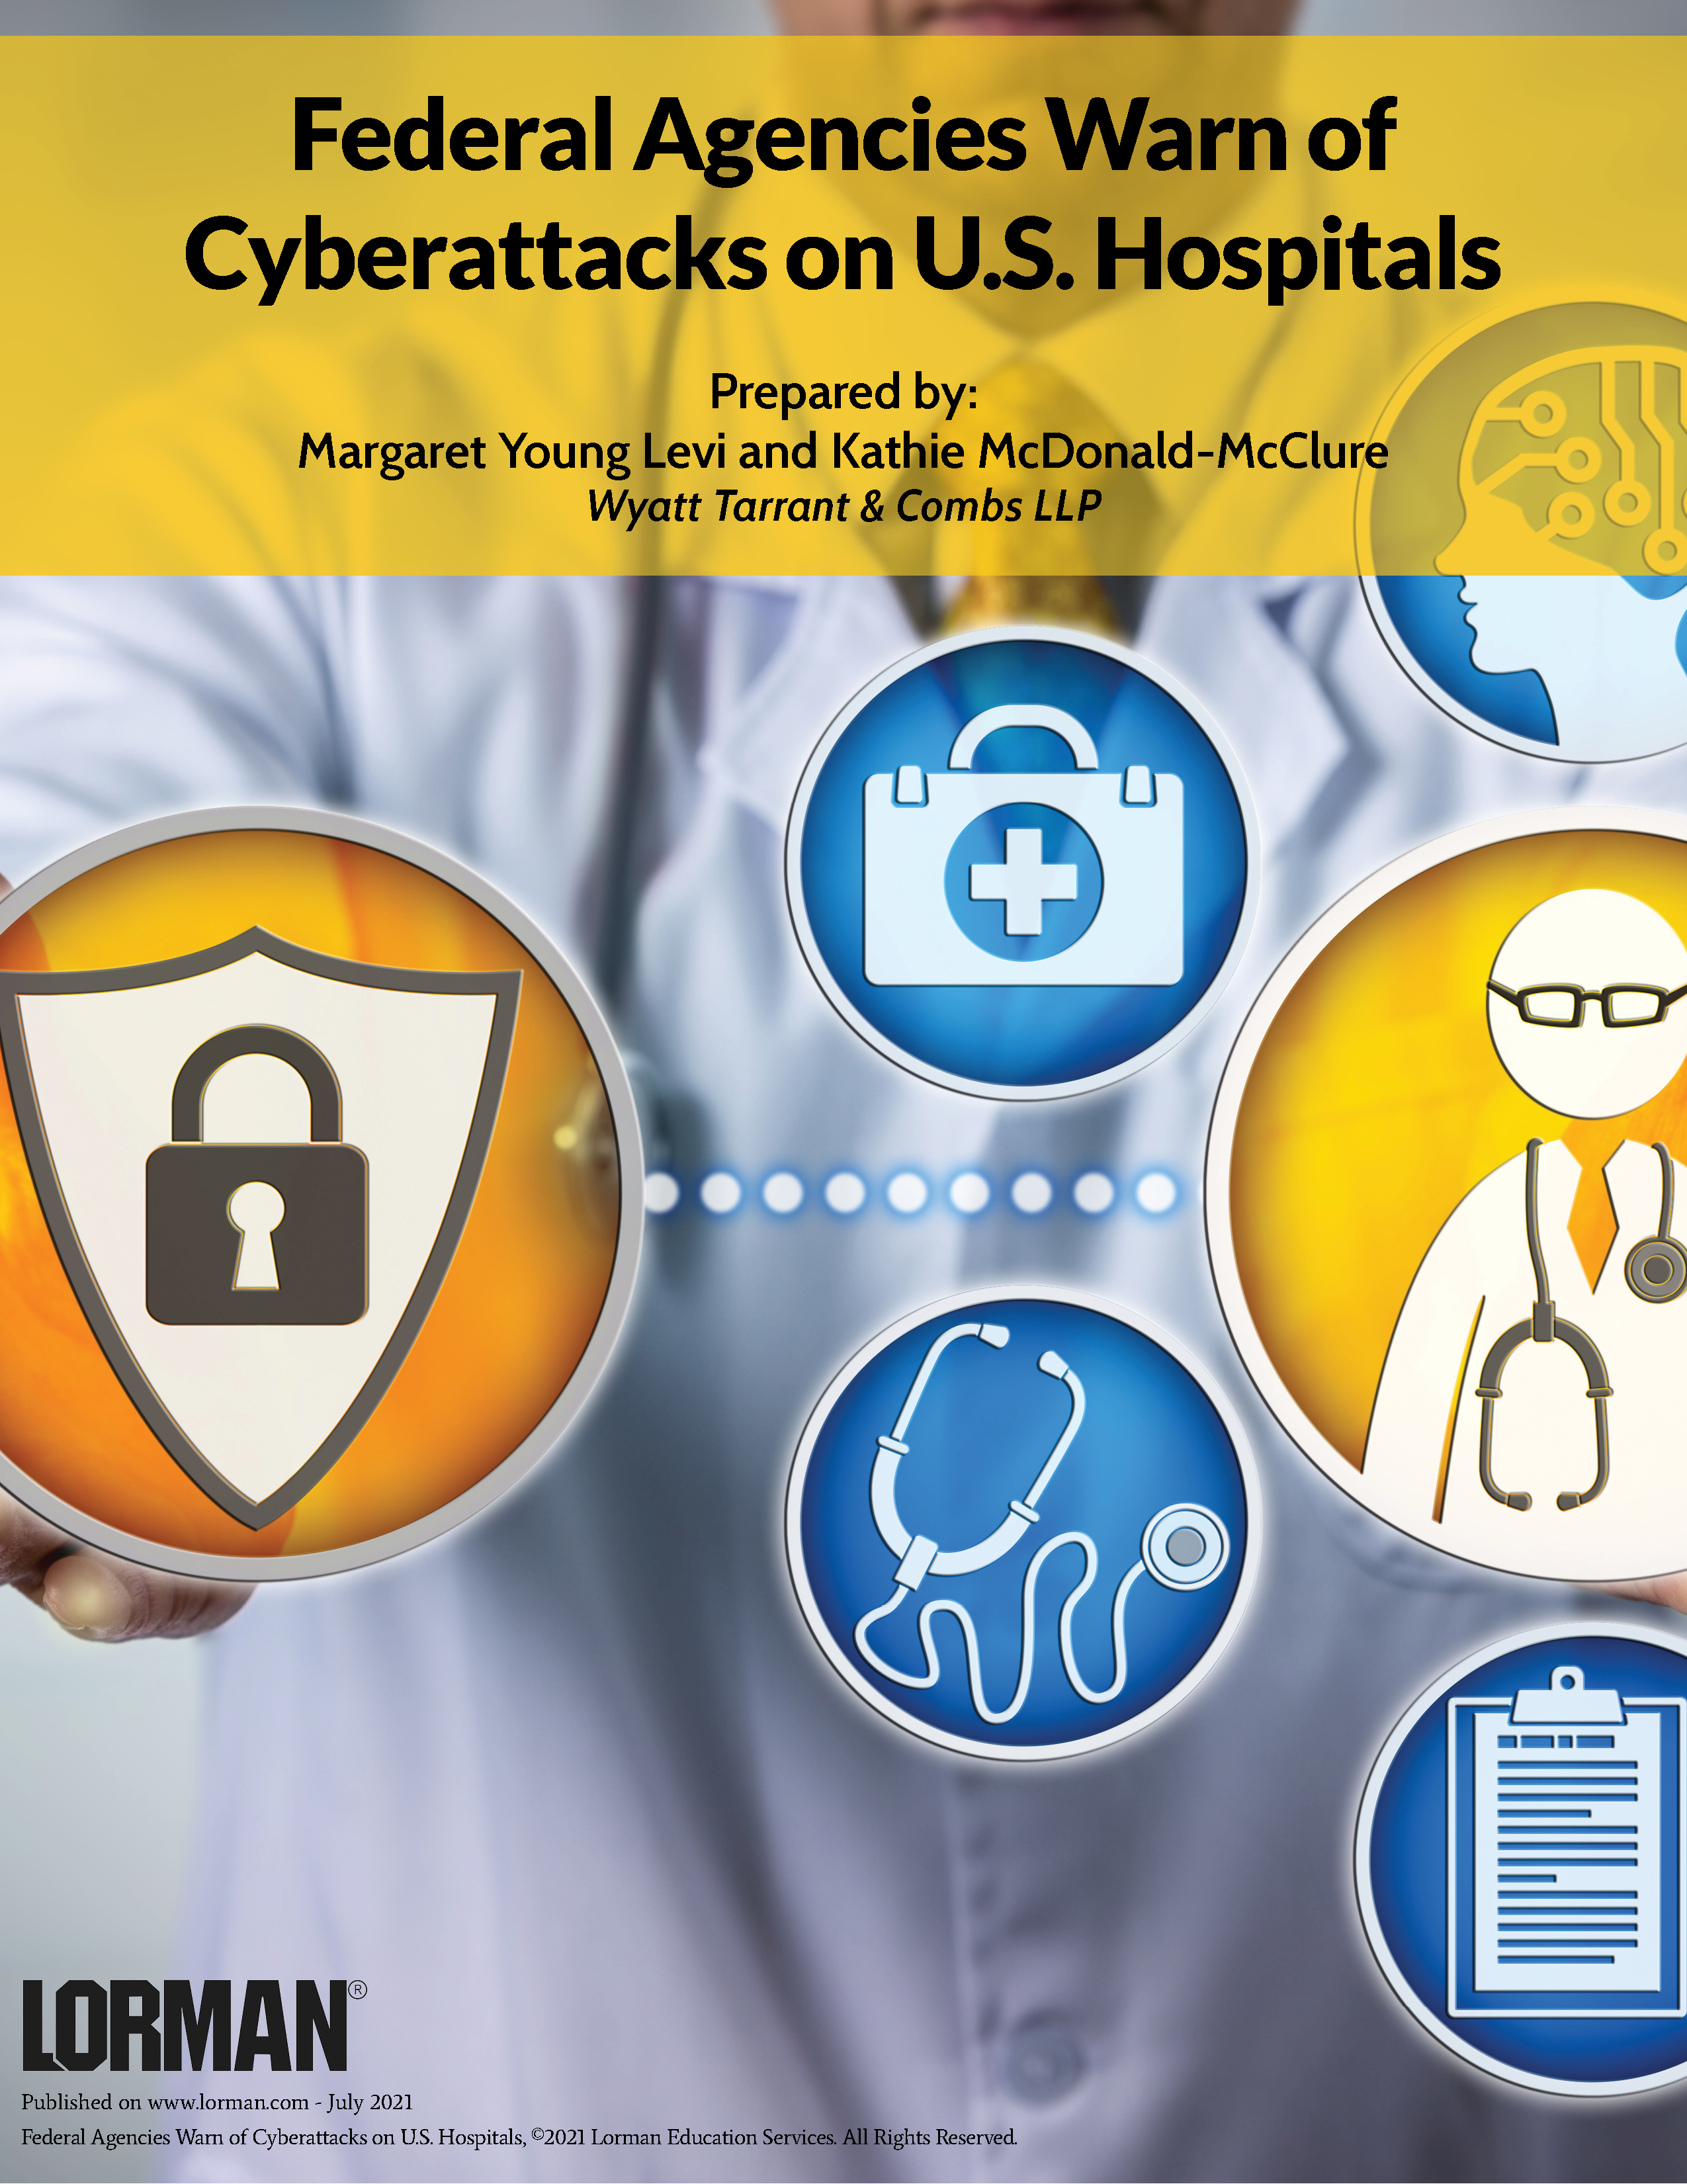 Federal Agencies Warn of Cyberattacks on U.S. Hospitals